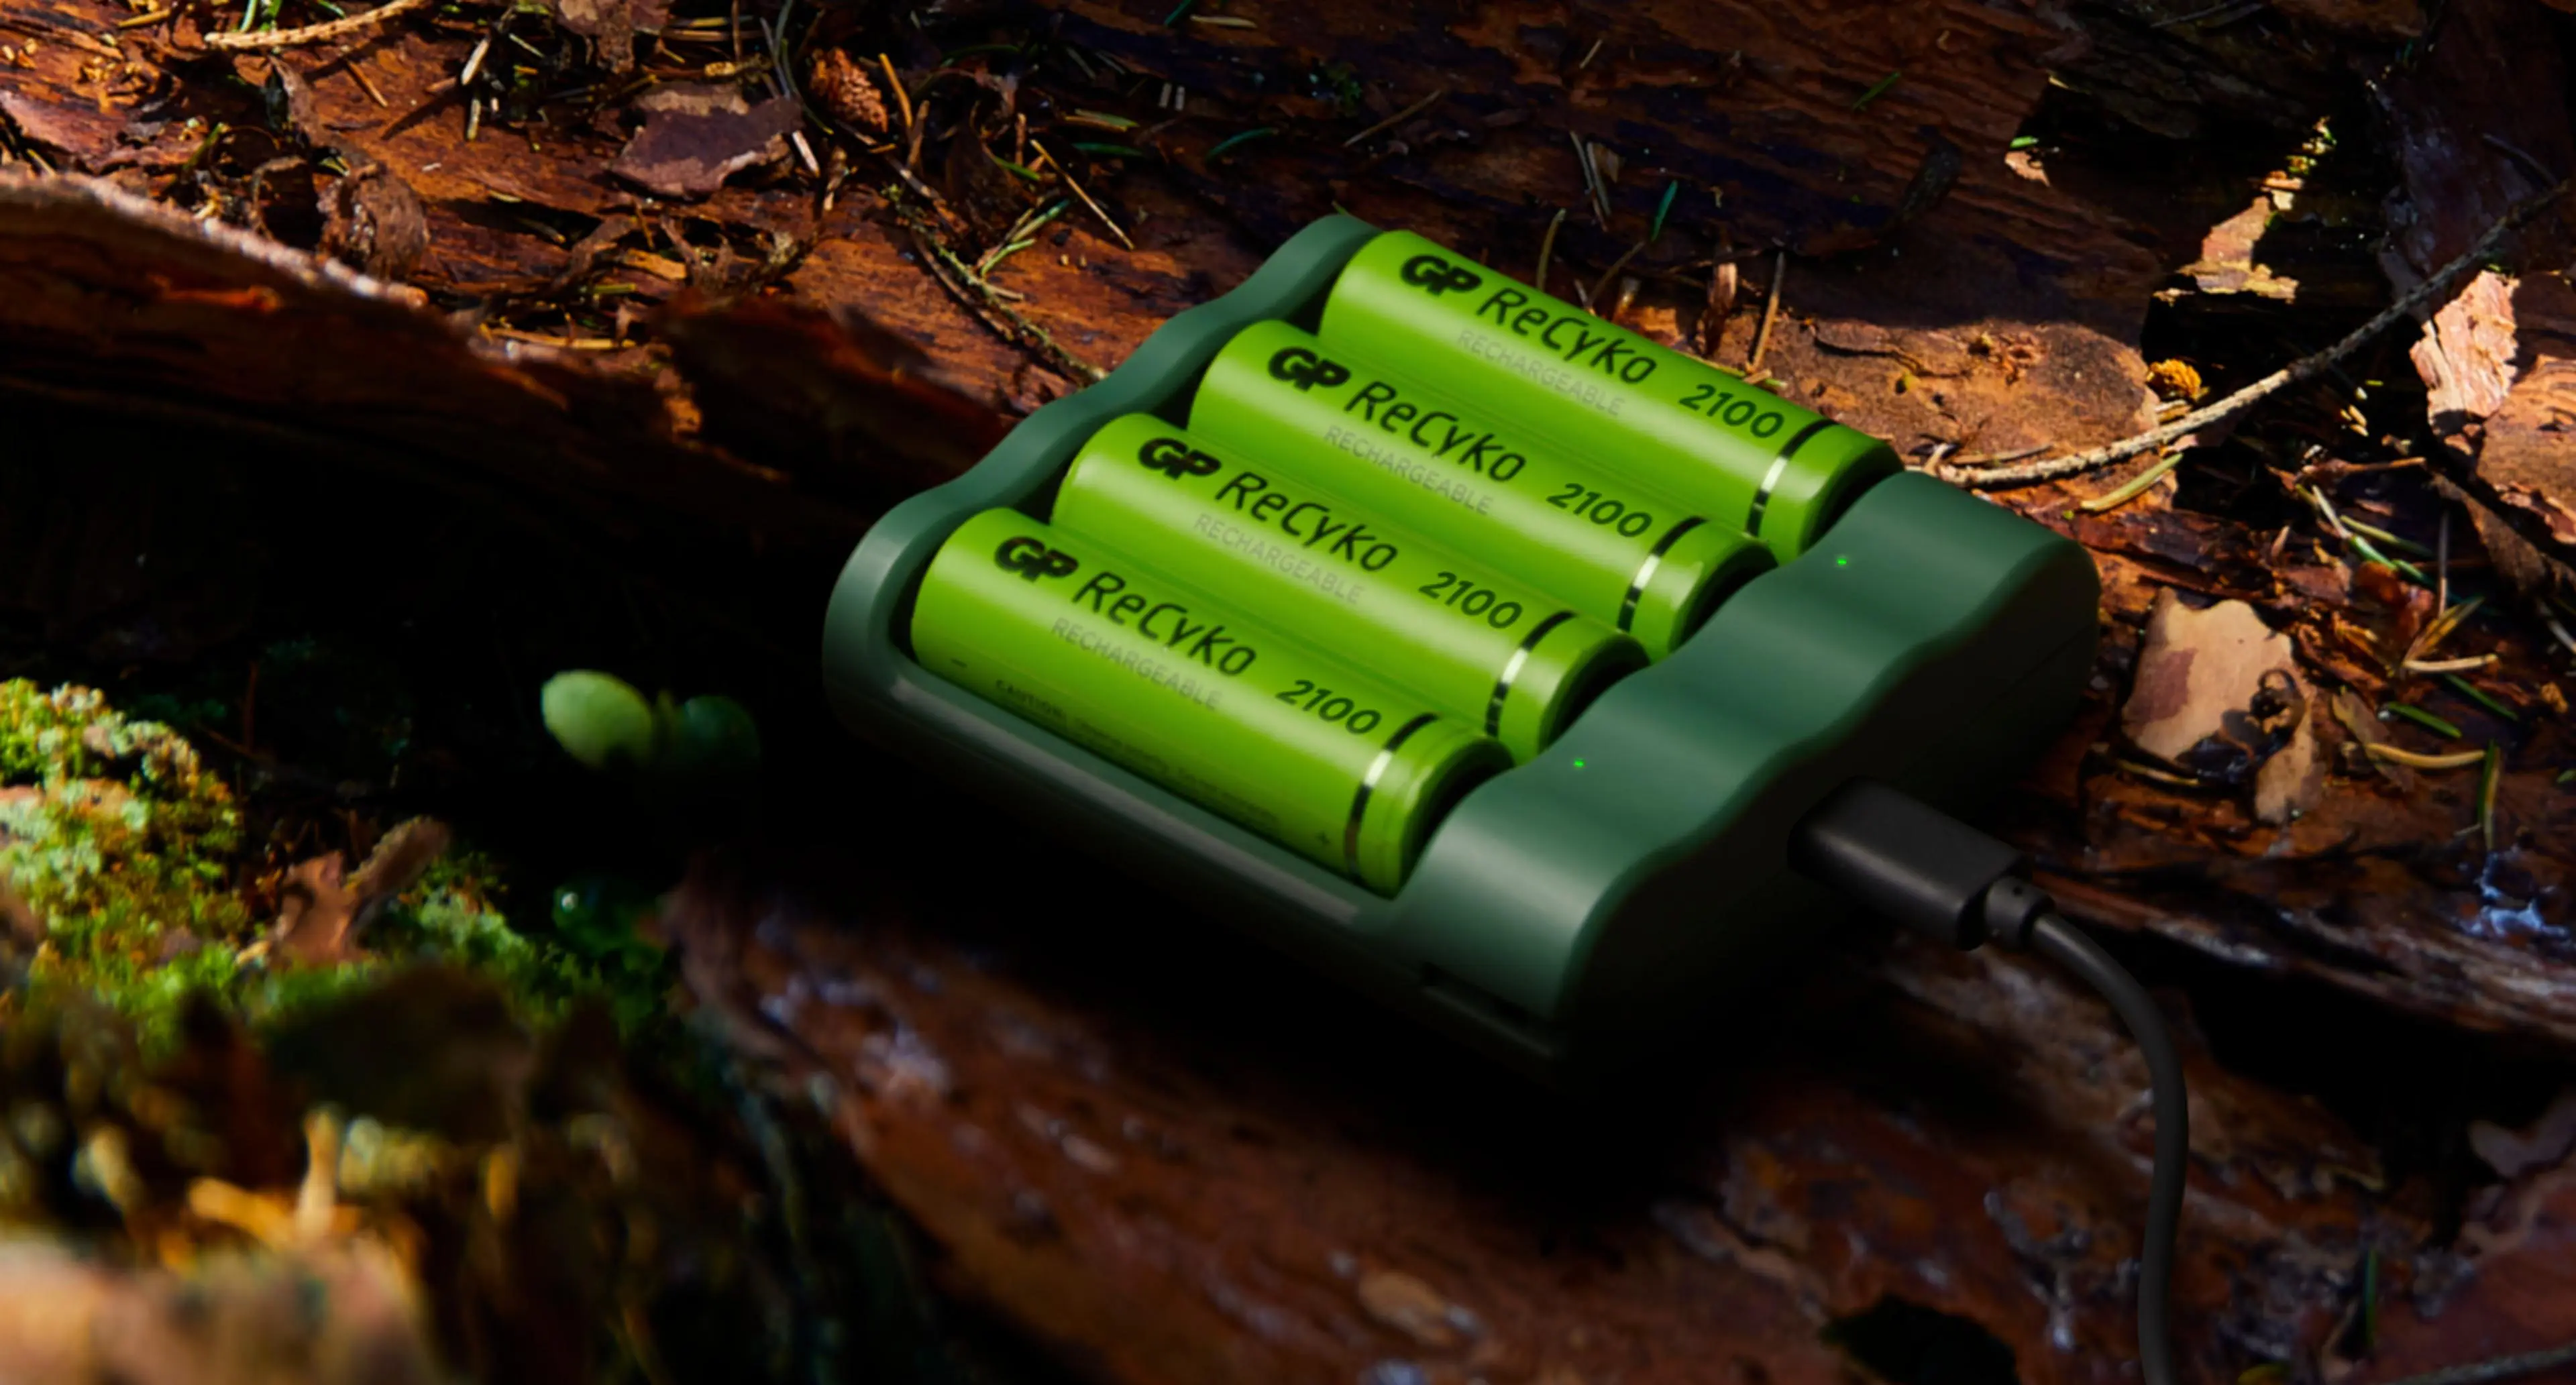 GP Rycyko oppladbare batterier